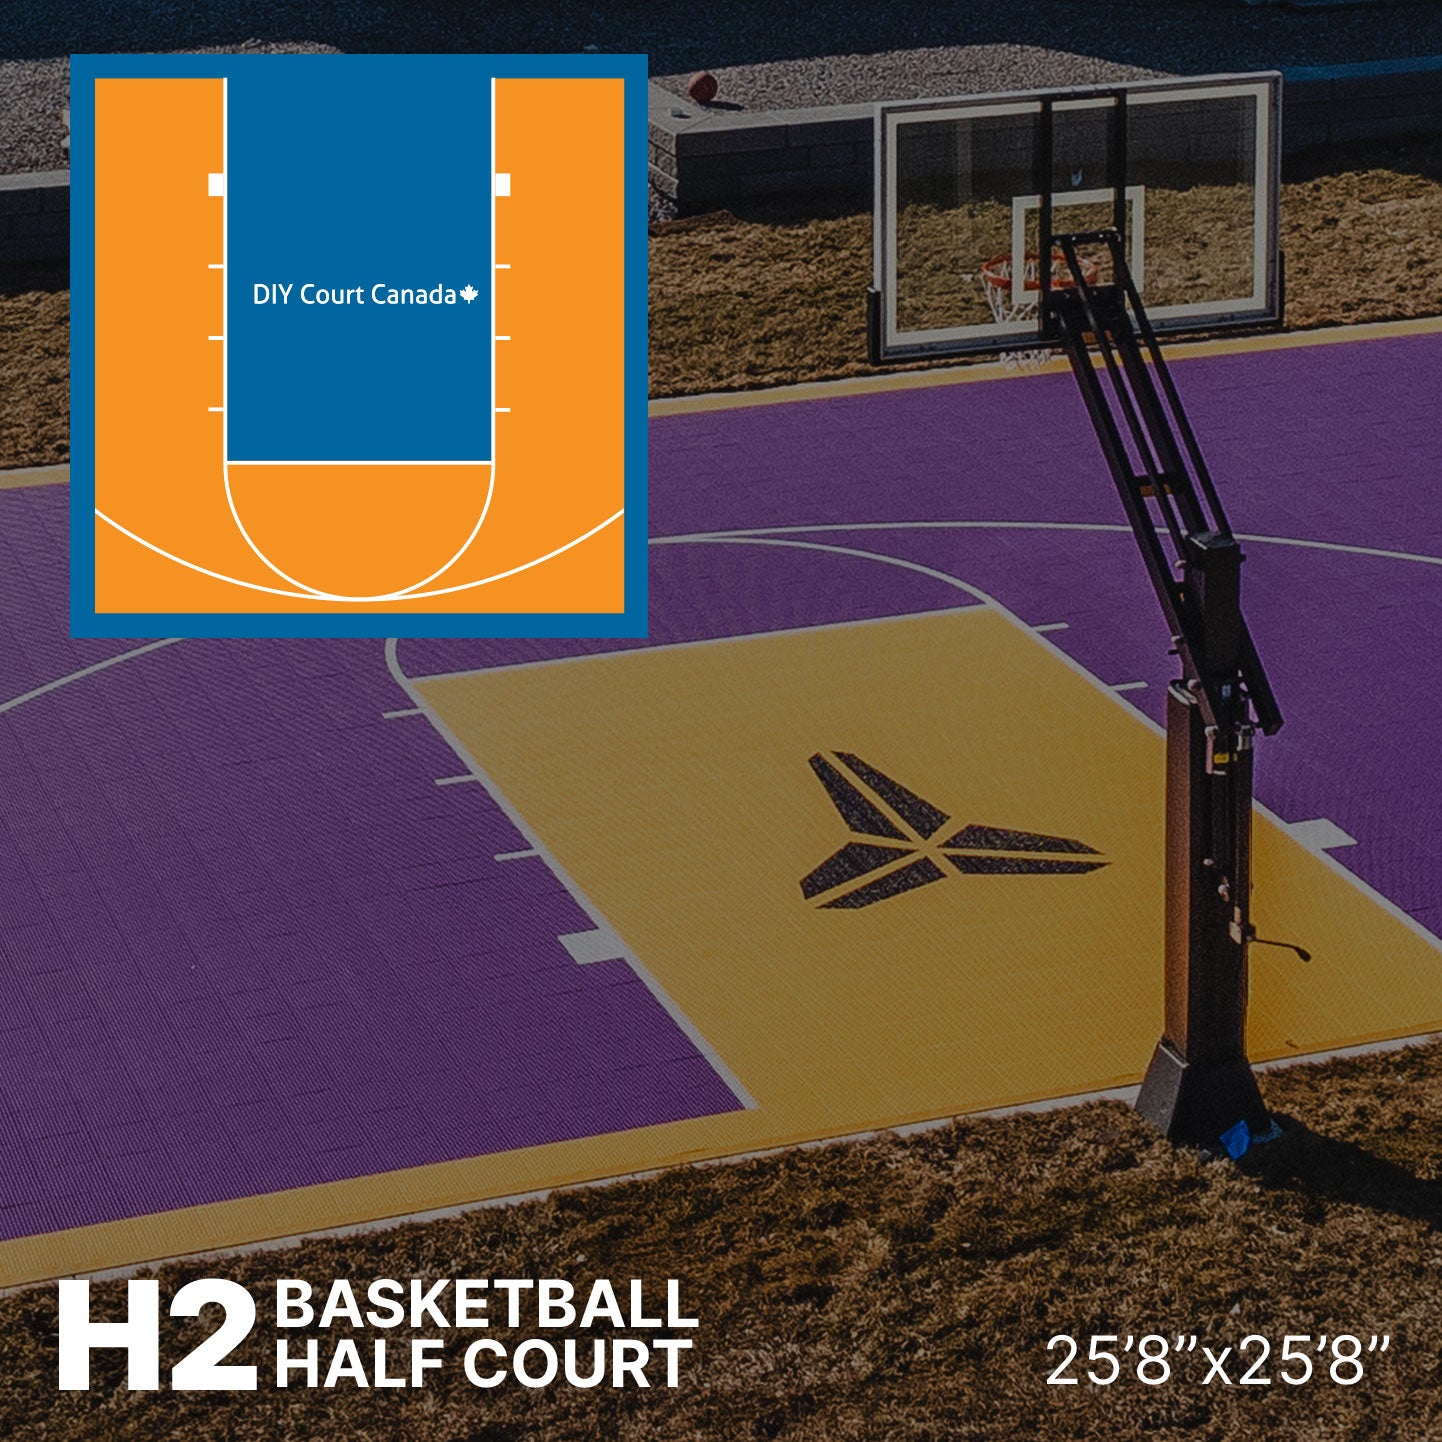 Basketball Court Kit - Half Court 25'8" x 25'8" (H2) - DIY Court Canada